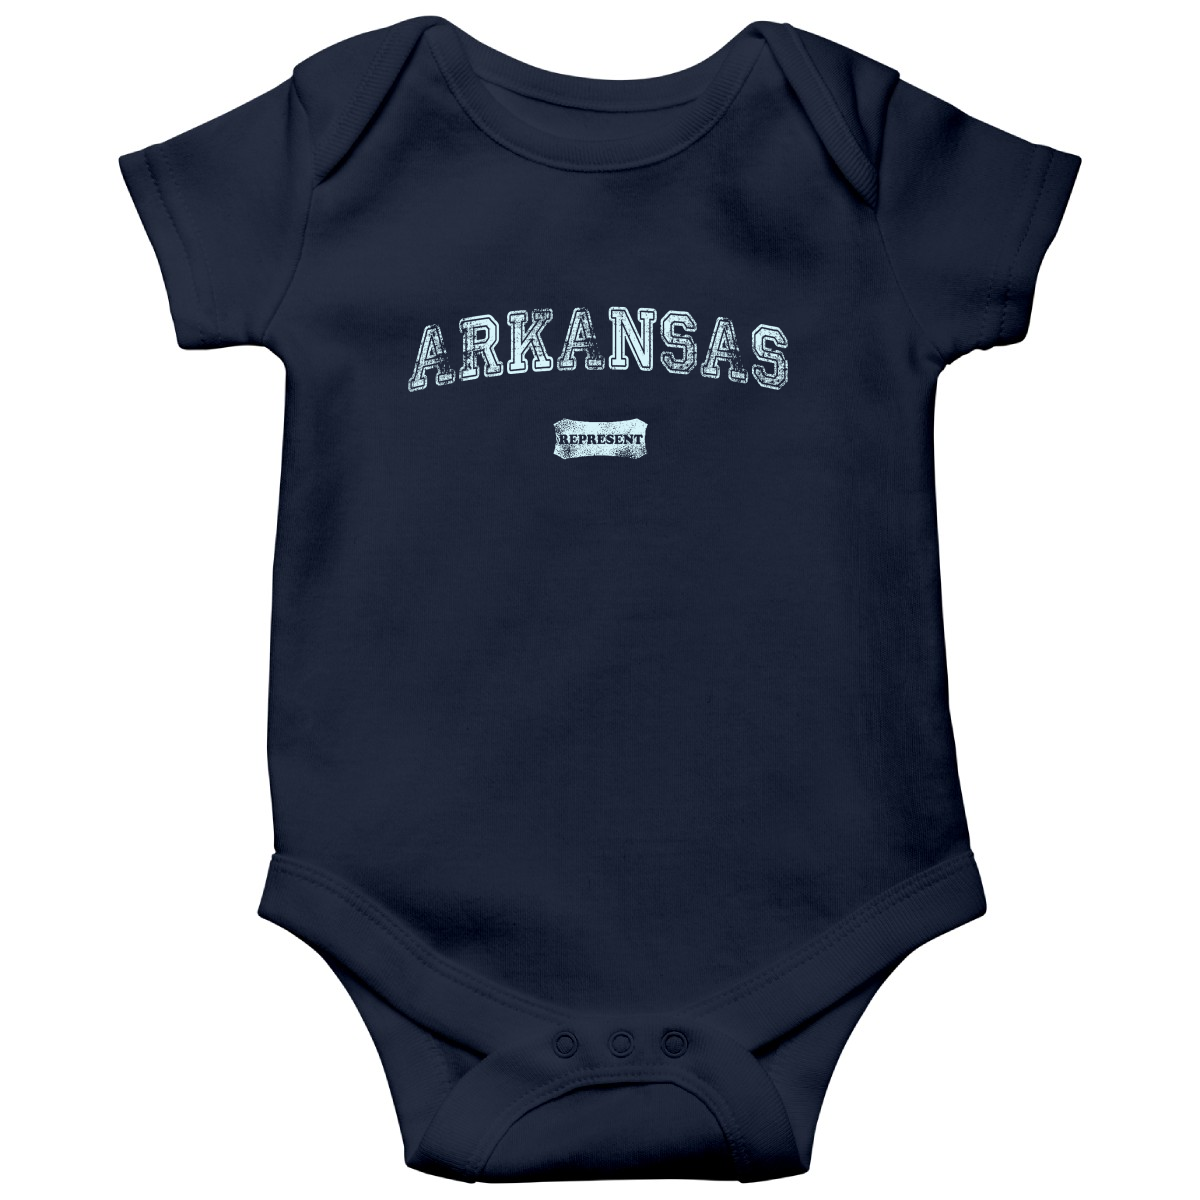 Arkansas Represent Baby Bodysuits